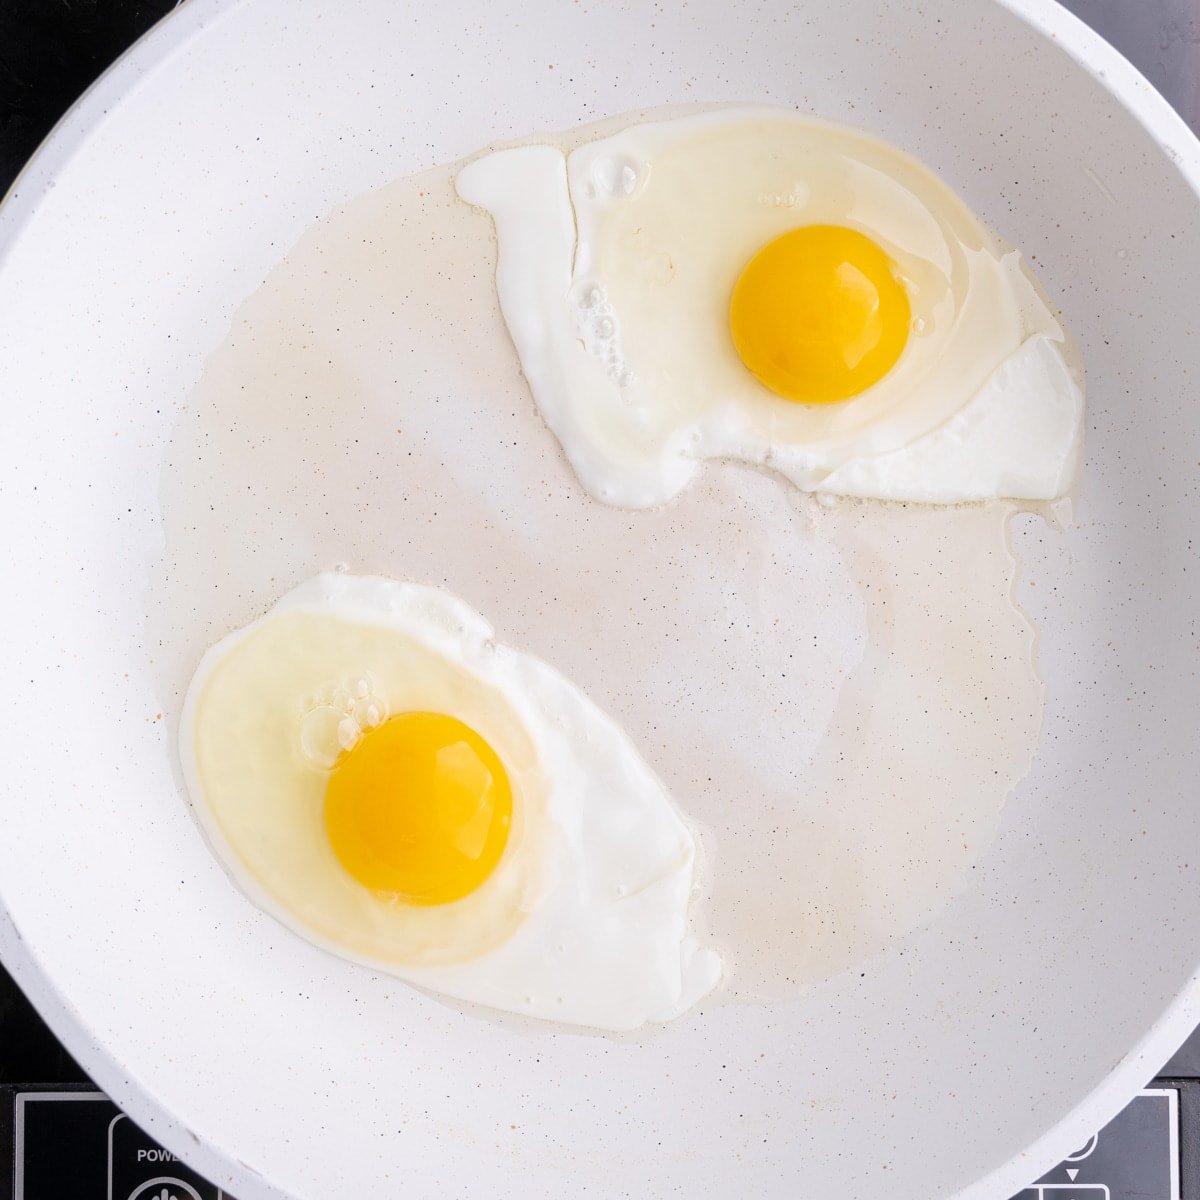 https://marleysmenu.com/wp-content/uploads/2023/01/Over-Hard-Eggs-Frying-in-a-Pan.jpg